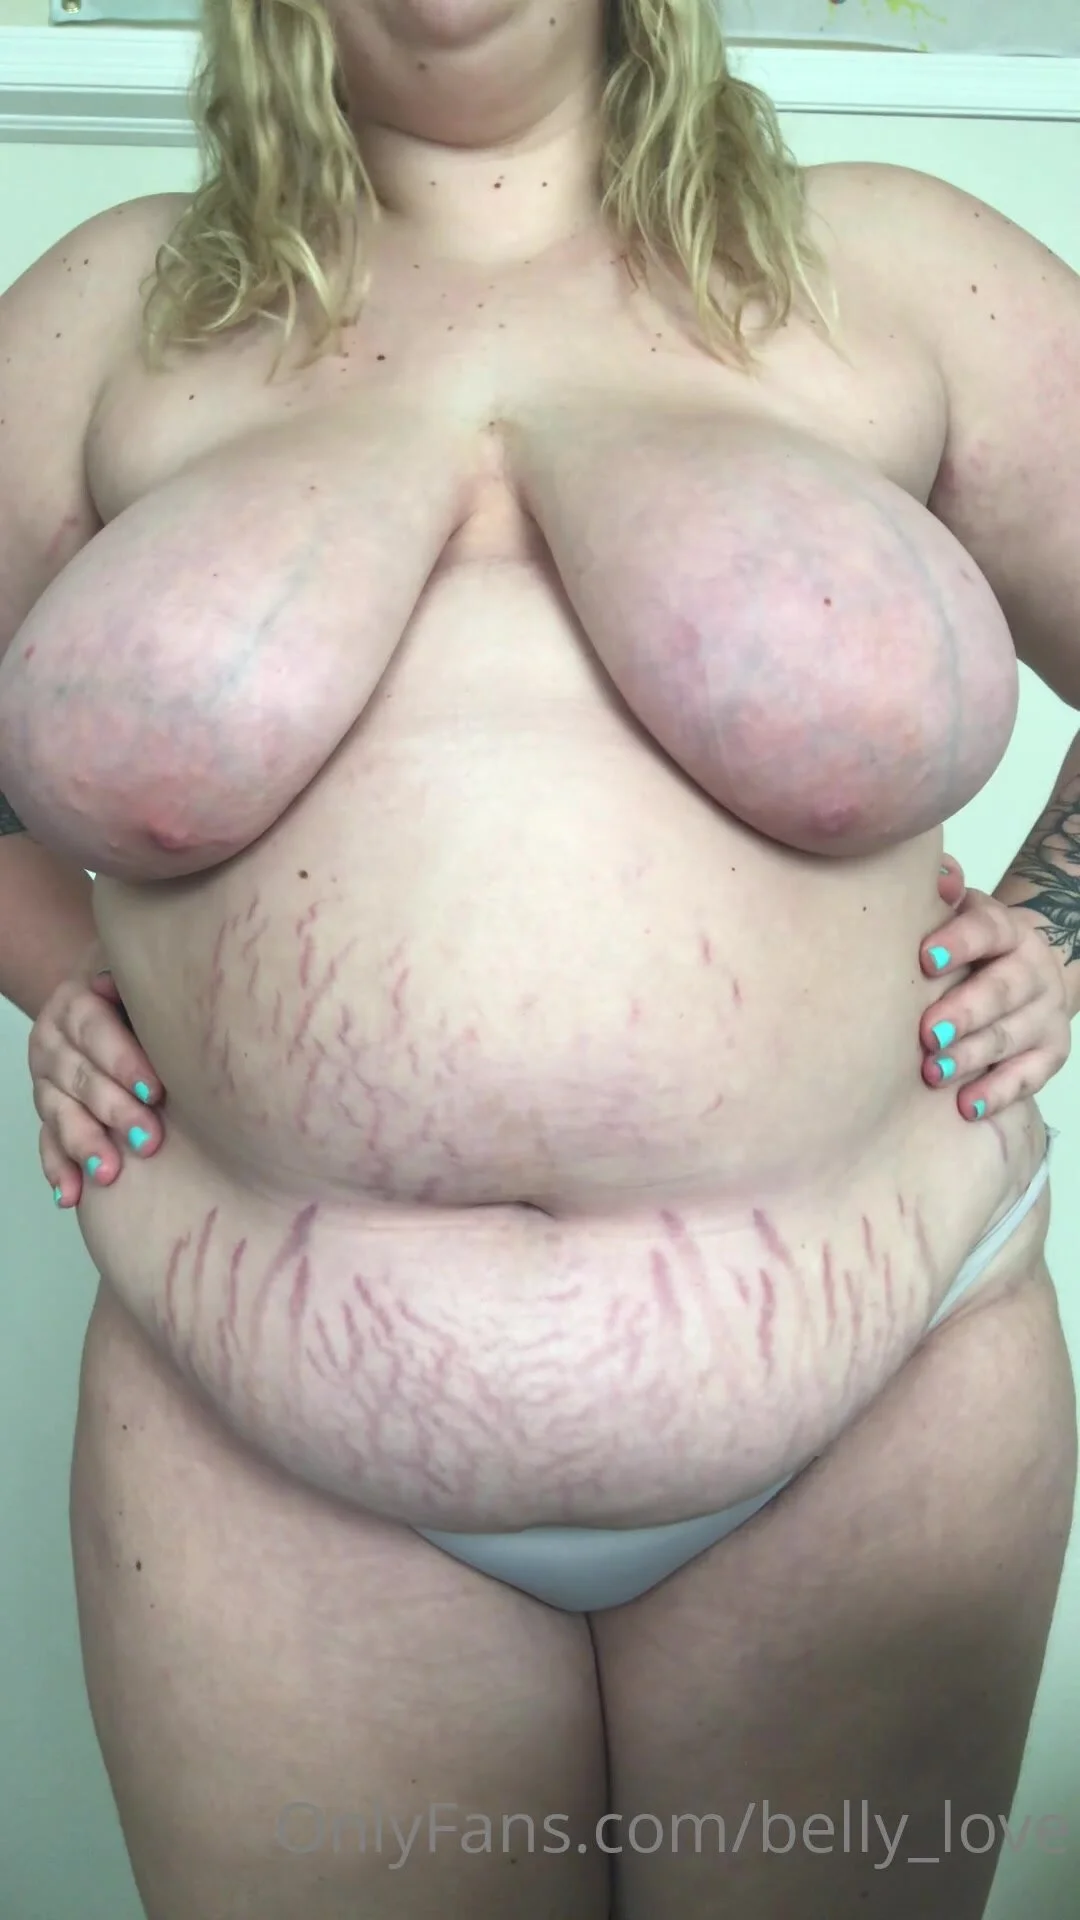 Fat Chicks Big Tits Tumble - Fat girl stretch marks 4 - ThisVid.com